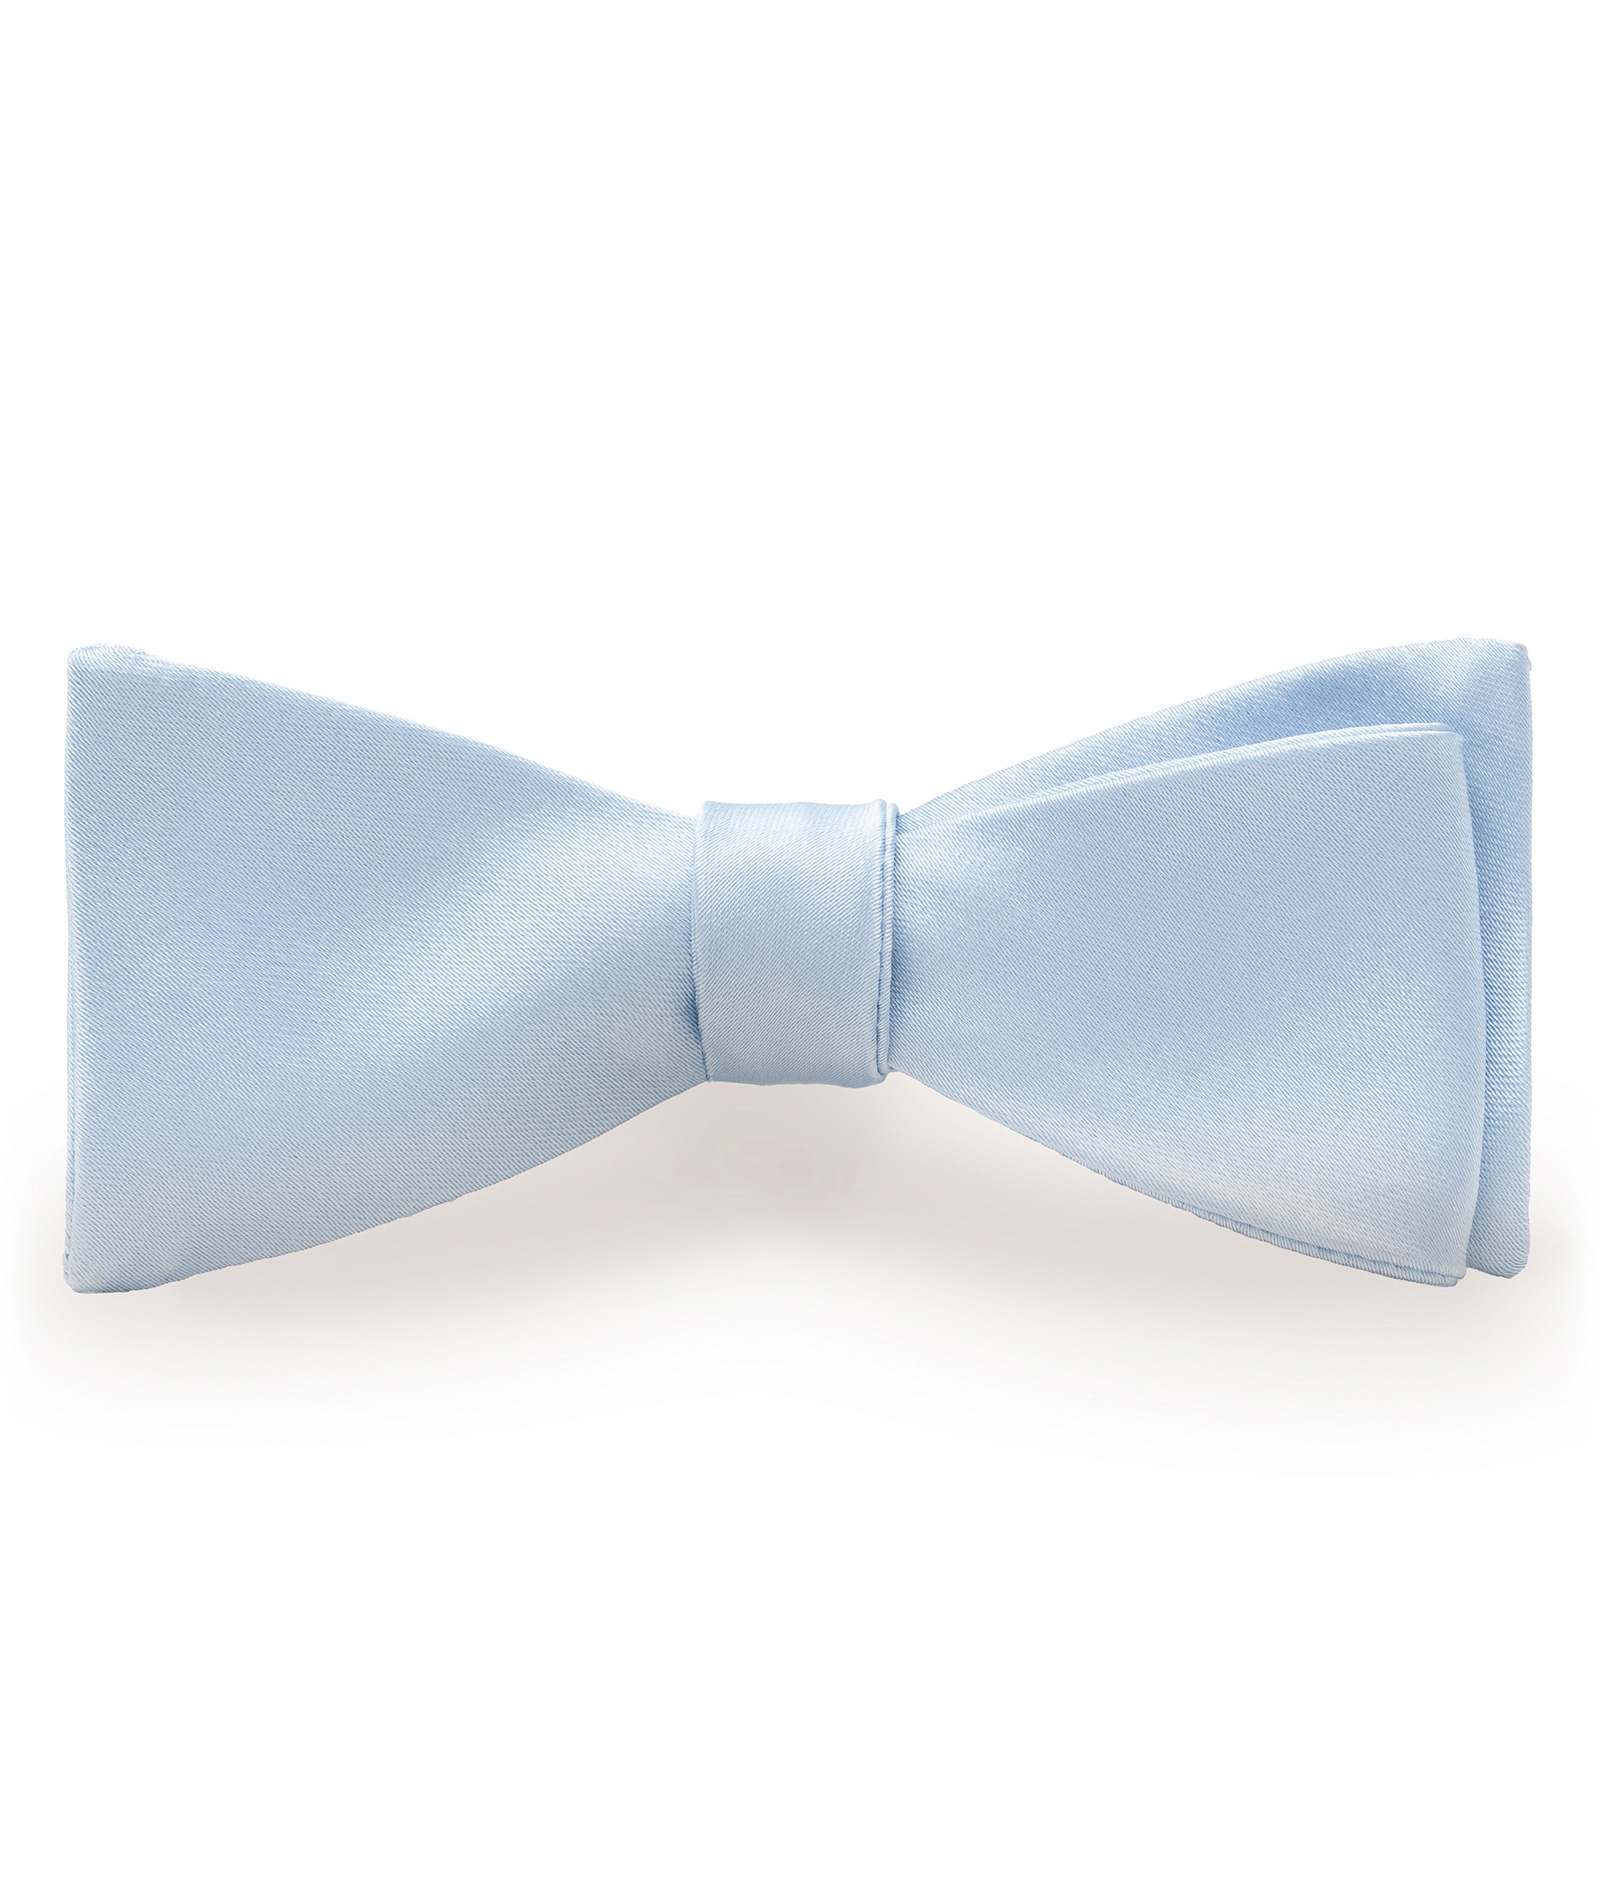 Silk self-tie mini bow tie, micropattern, handmade in Italy